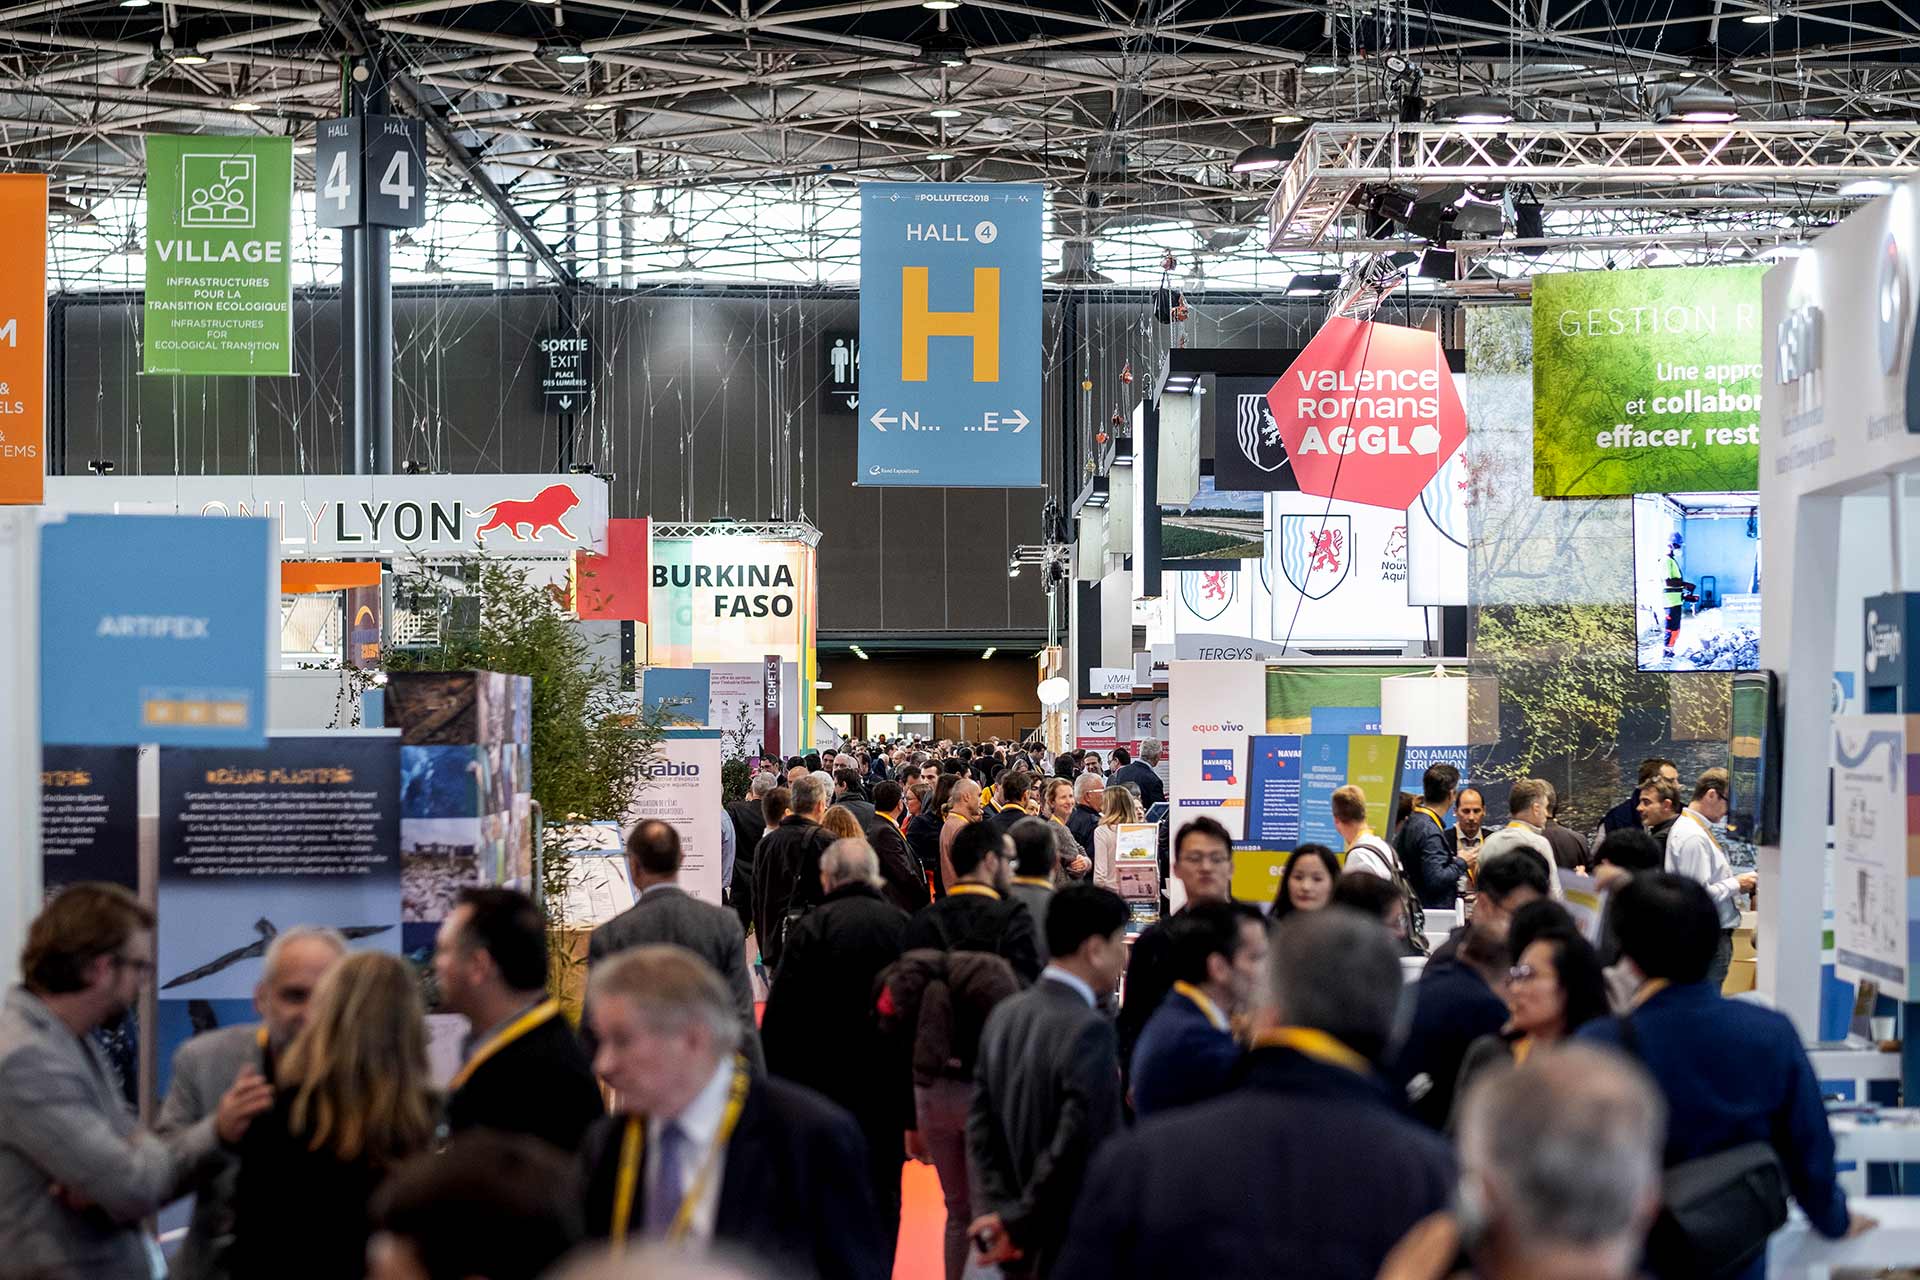 hall d’exposition Eurexpo Lyon lors de Pollutec 2018